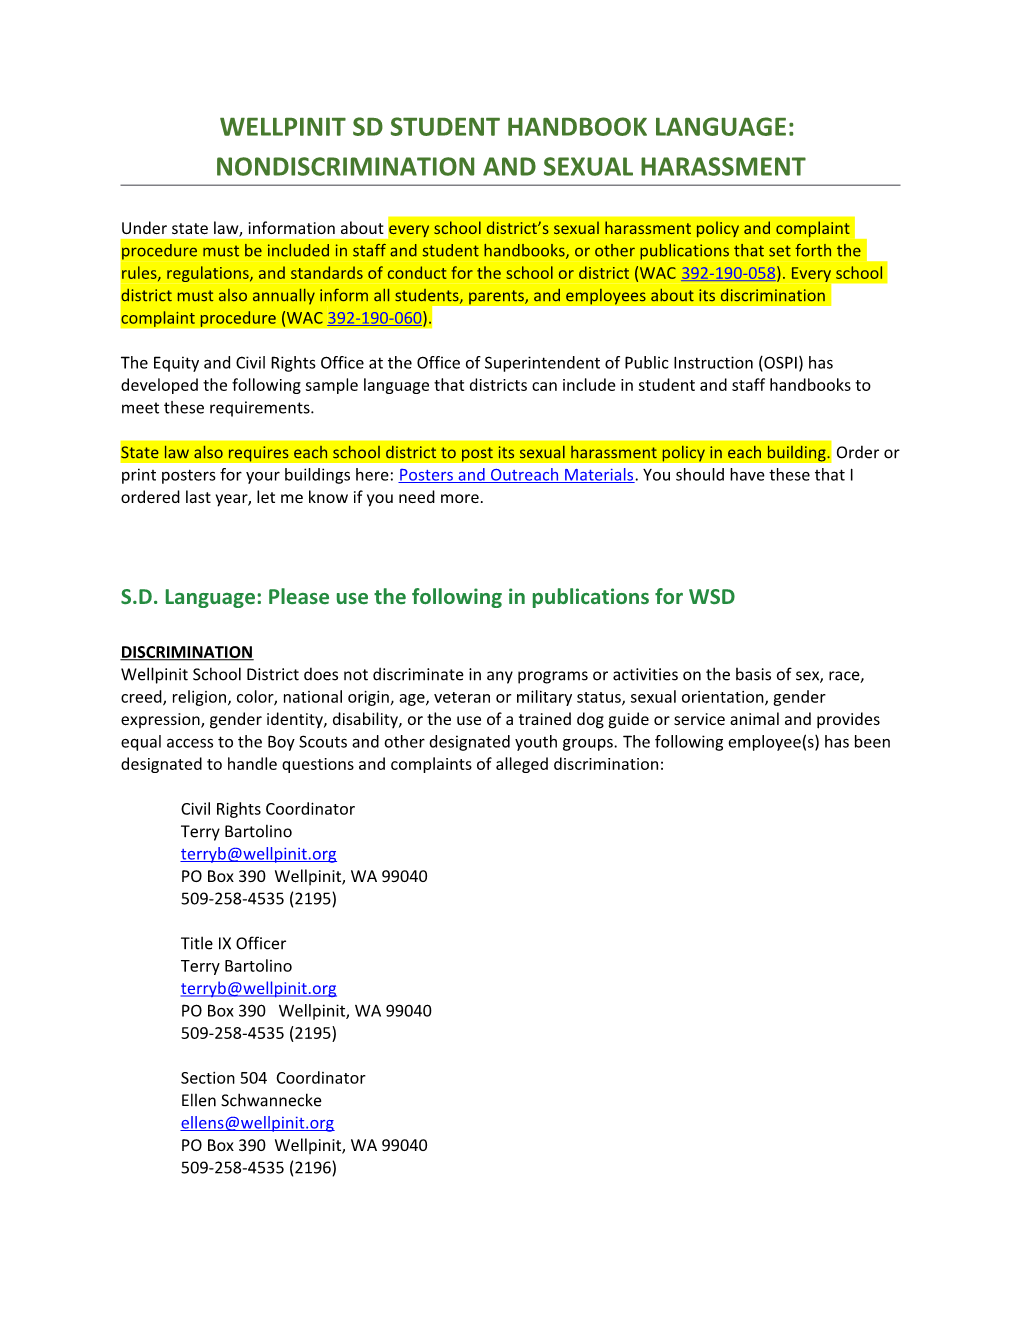 Sample Handbook Language: Nondiscrimination and Sexual Harassment